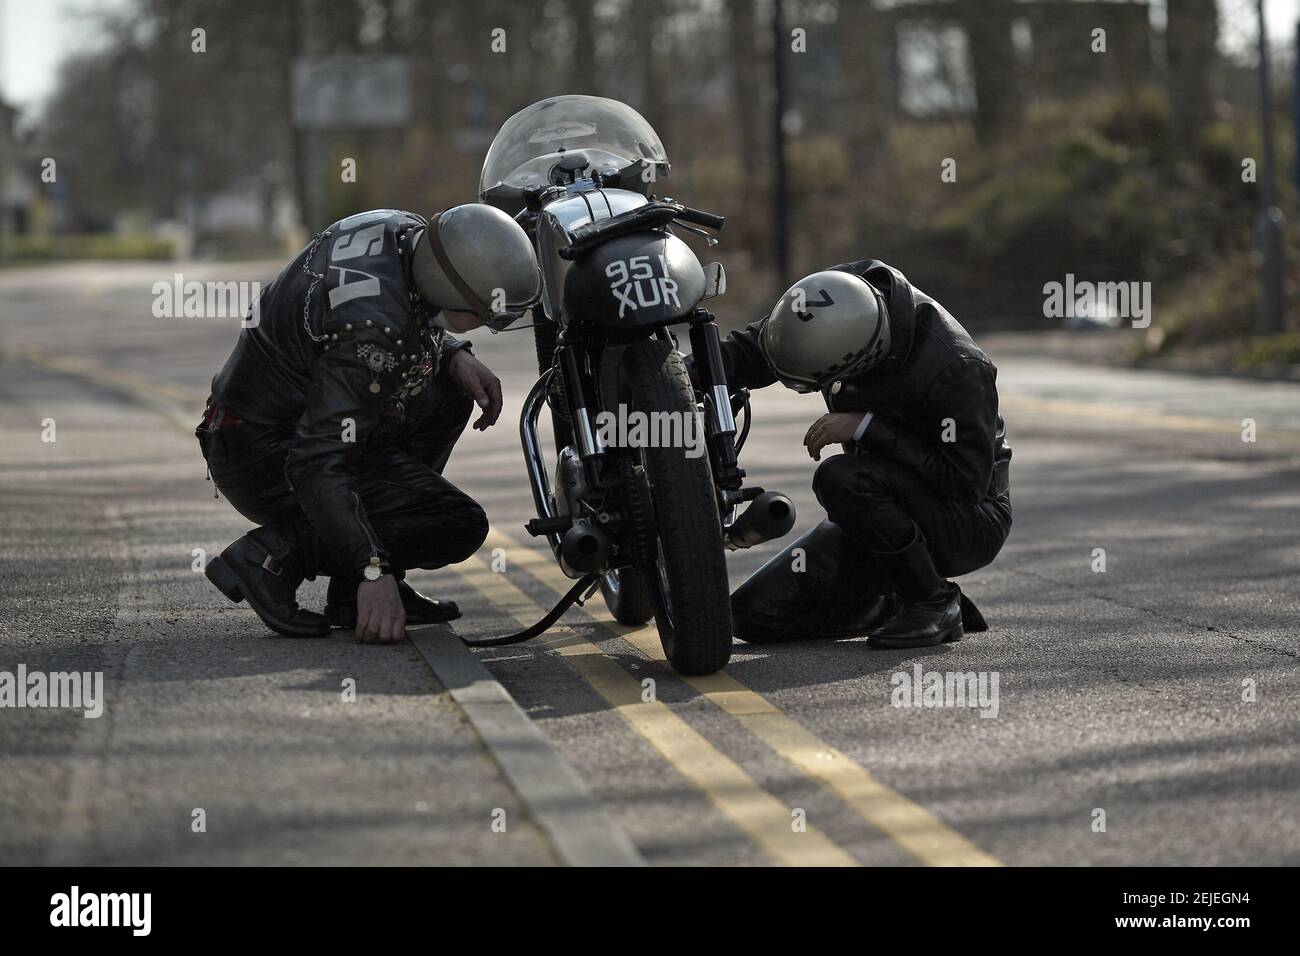 Two men in leather biker gear checking motorbike on road Stock Photo